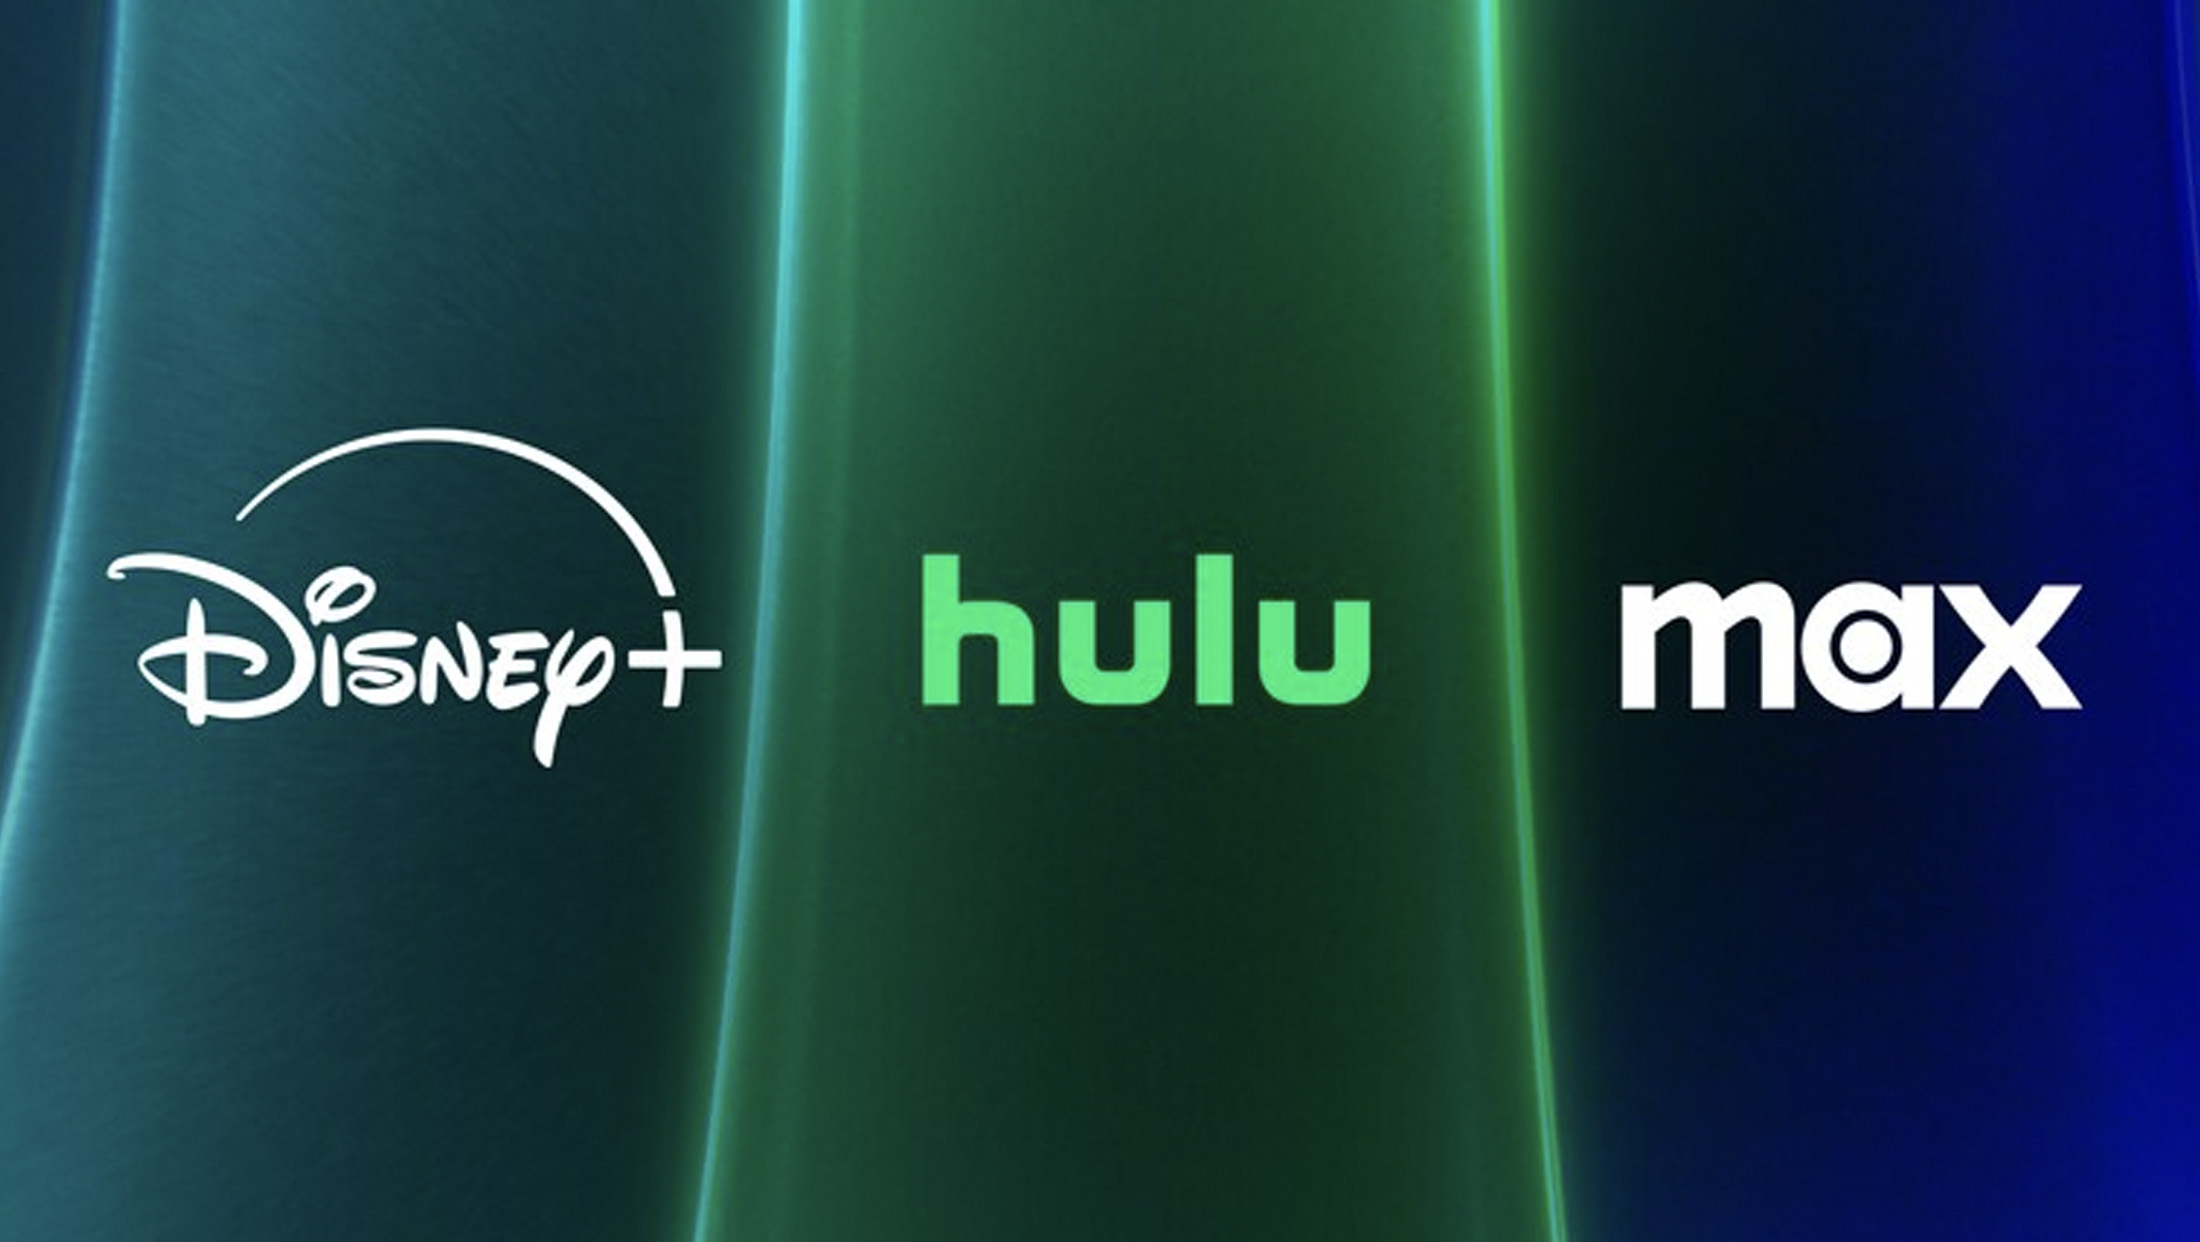 Disney+, Hulu, Max bundle launches [Video]